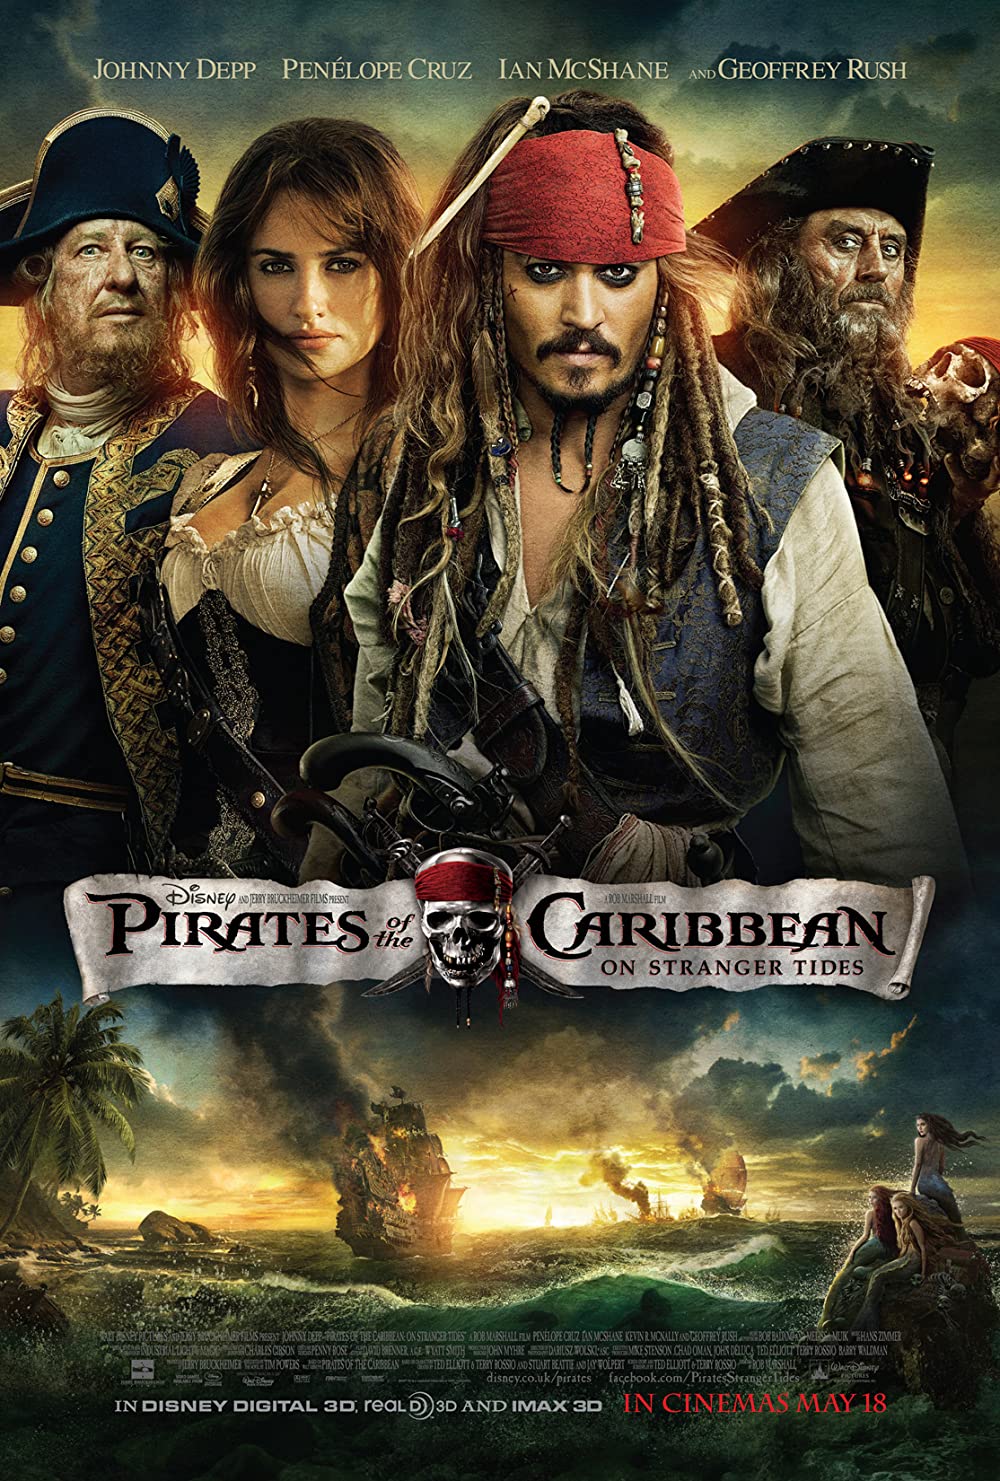 Pirates of the Caribbean 4 (2011) ผจญภัยล่าสายน้ำอมฤตสุดขอบโลก